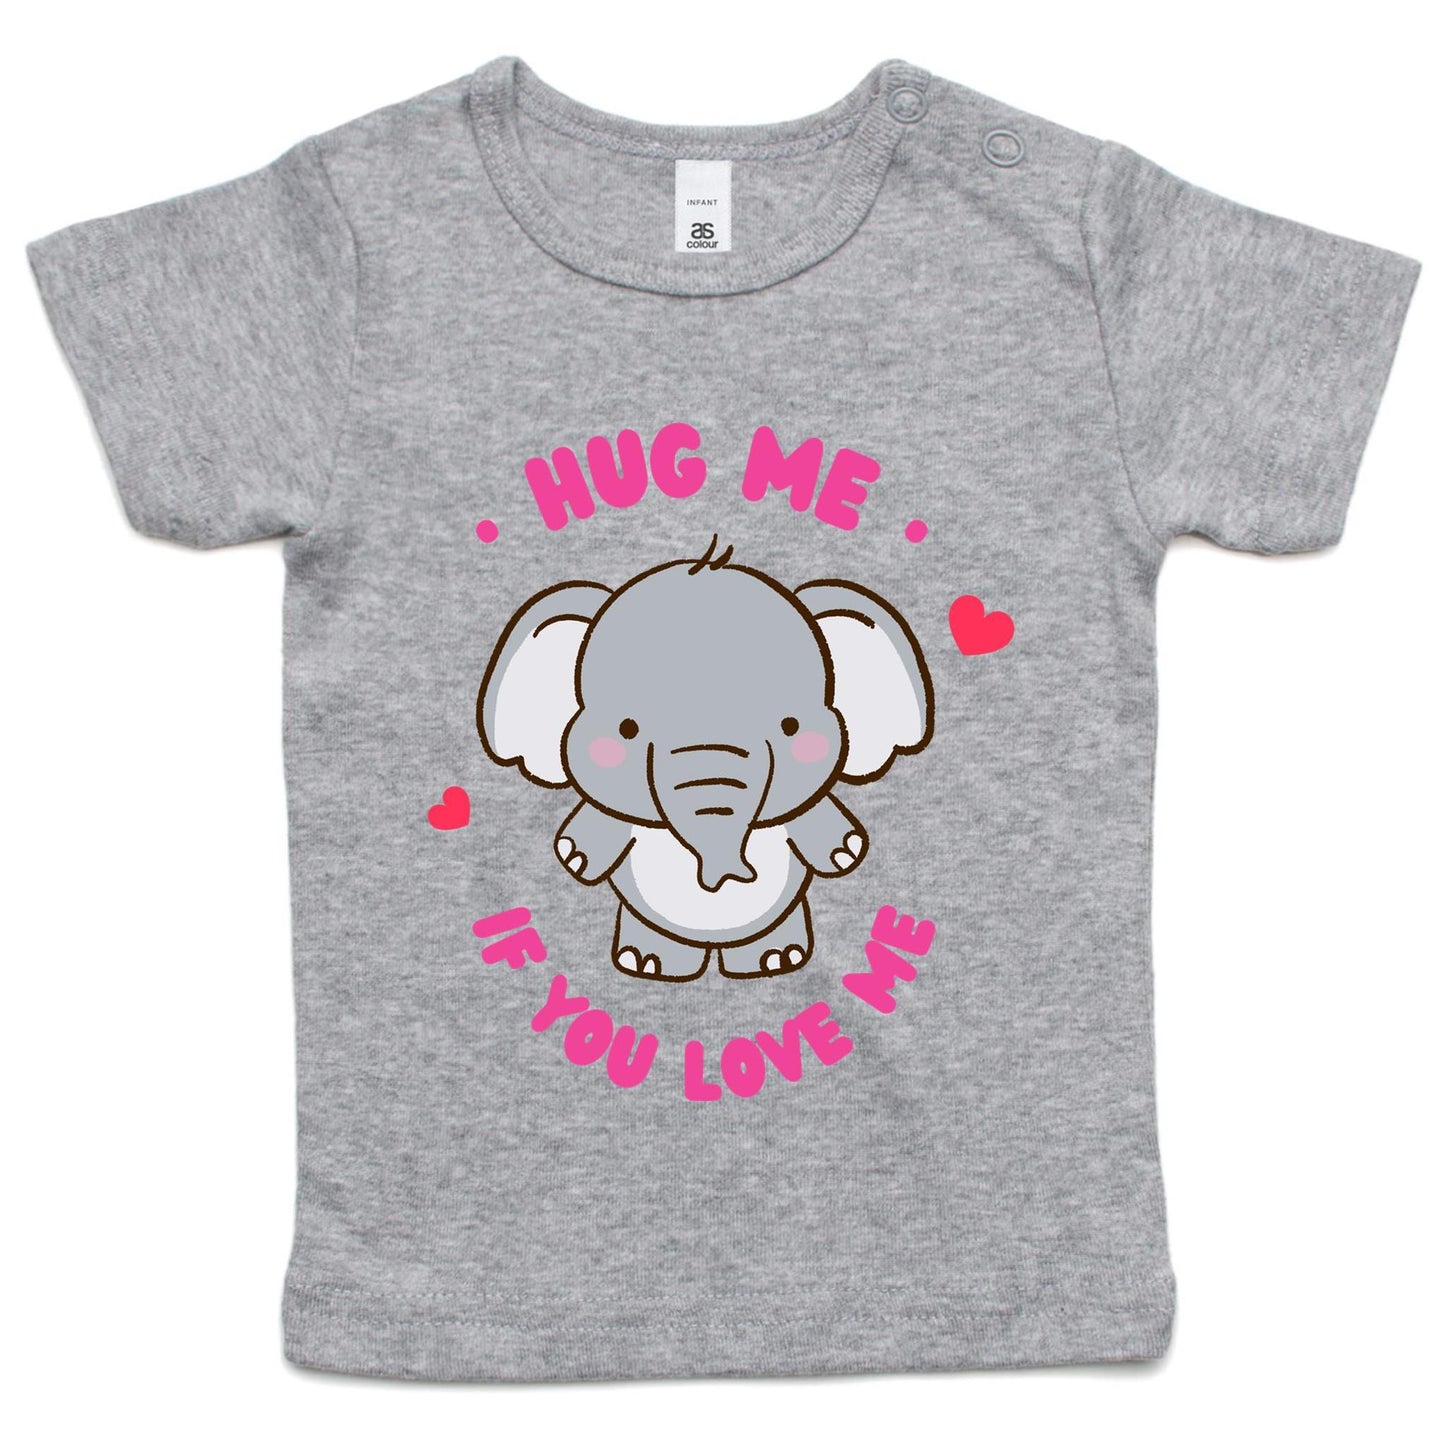 Hug Me If You Love Me - Baby T-shirt Grey Marle Baby T-shirt animal